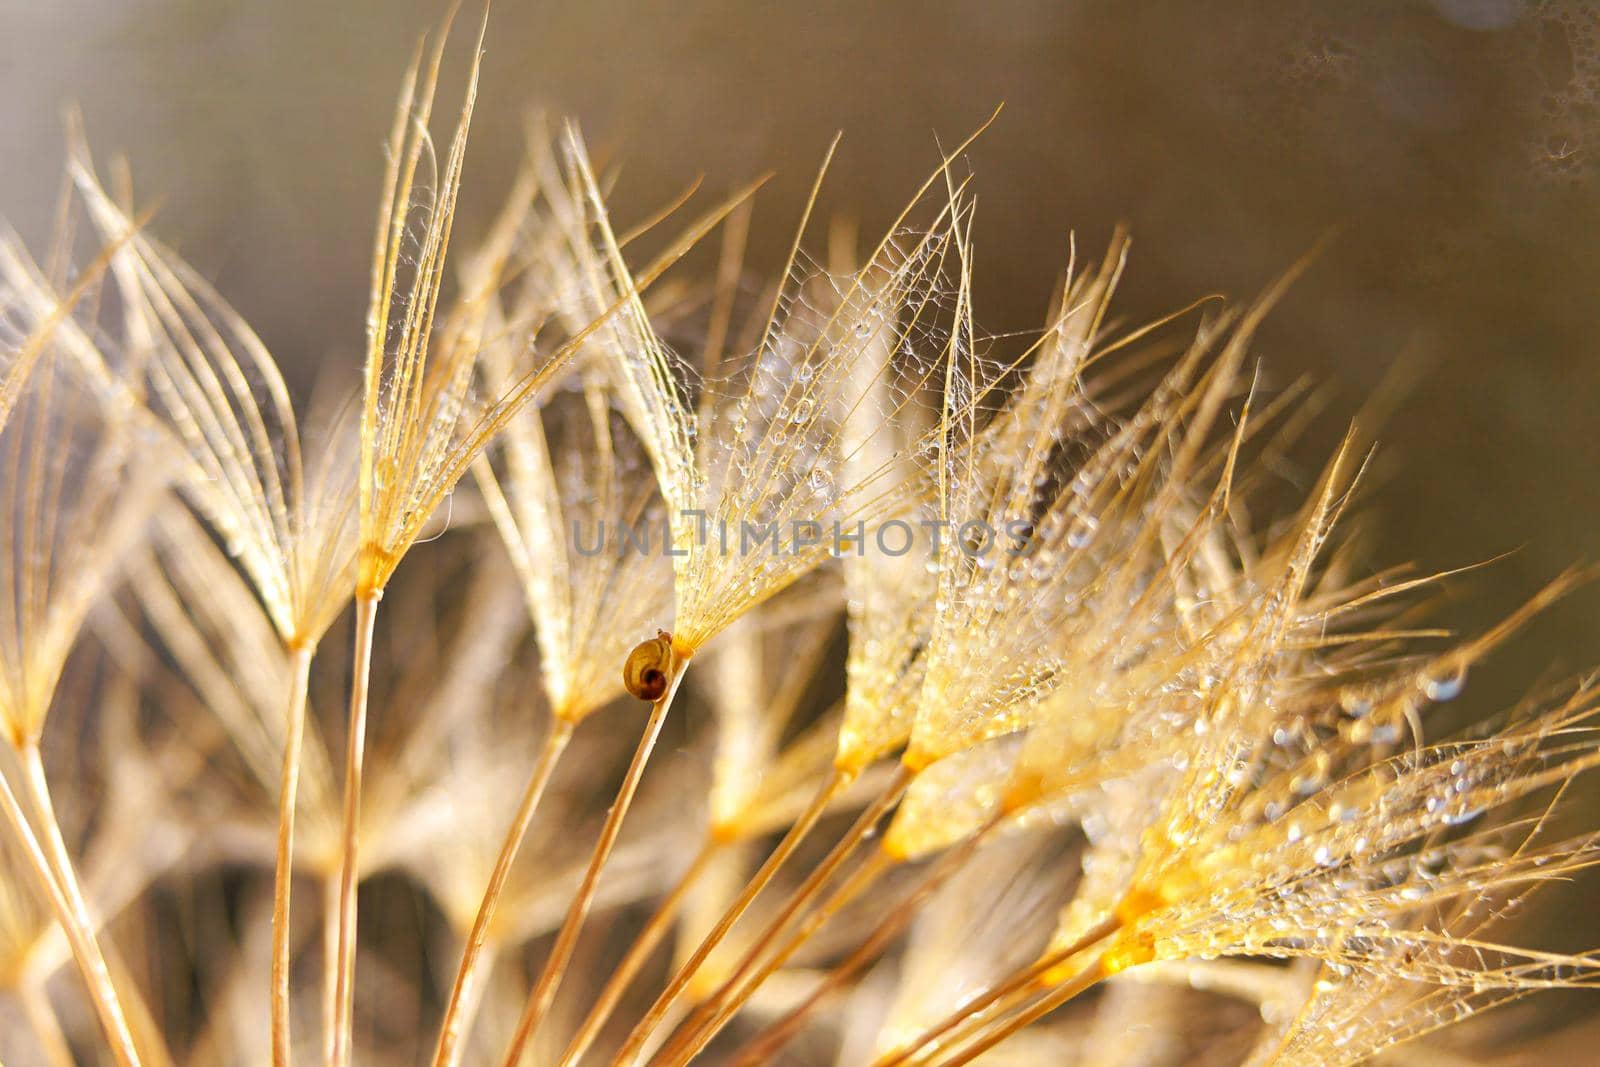 Little snail on dandelion flower. Nature background with dandelion by lifesummerlin